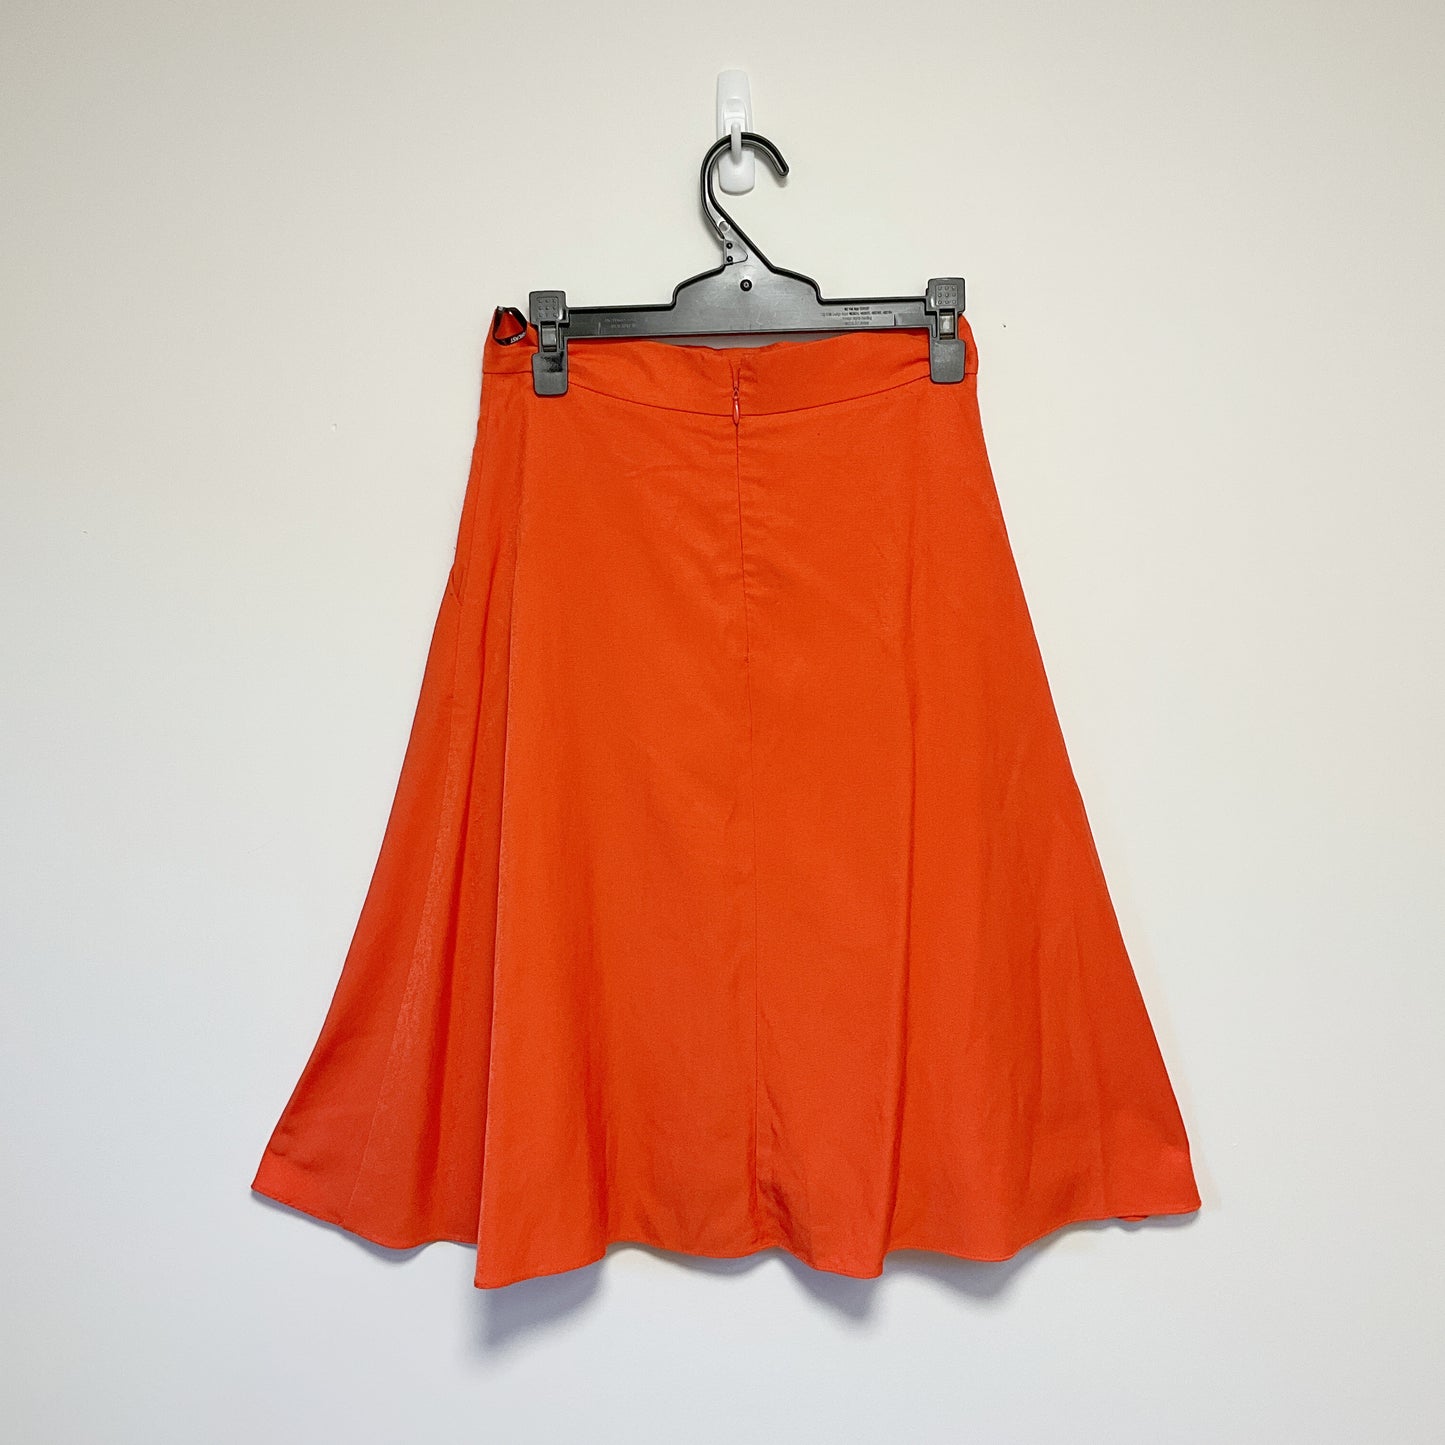 FORCAST TANGERINE Skirt - Size AU4